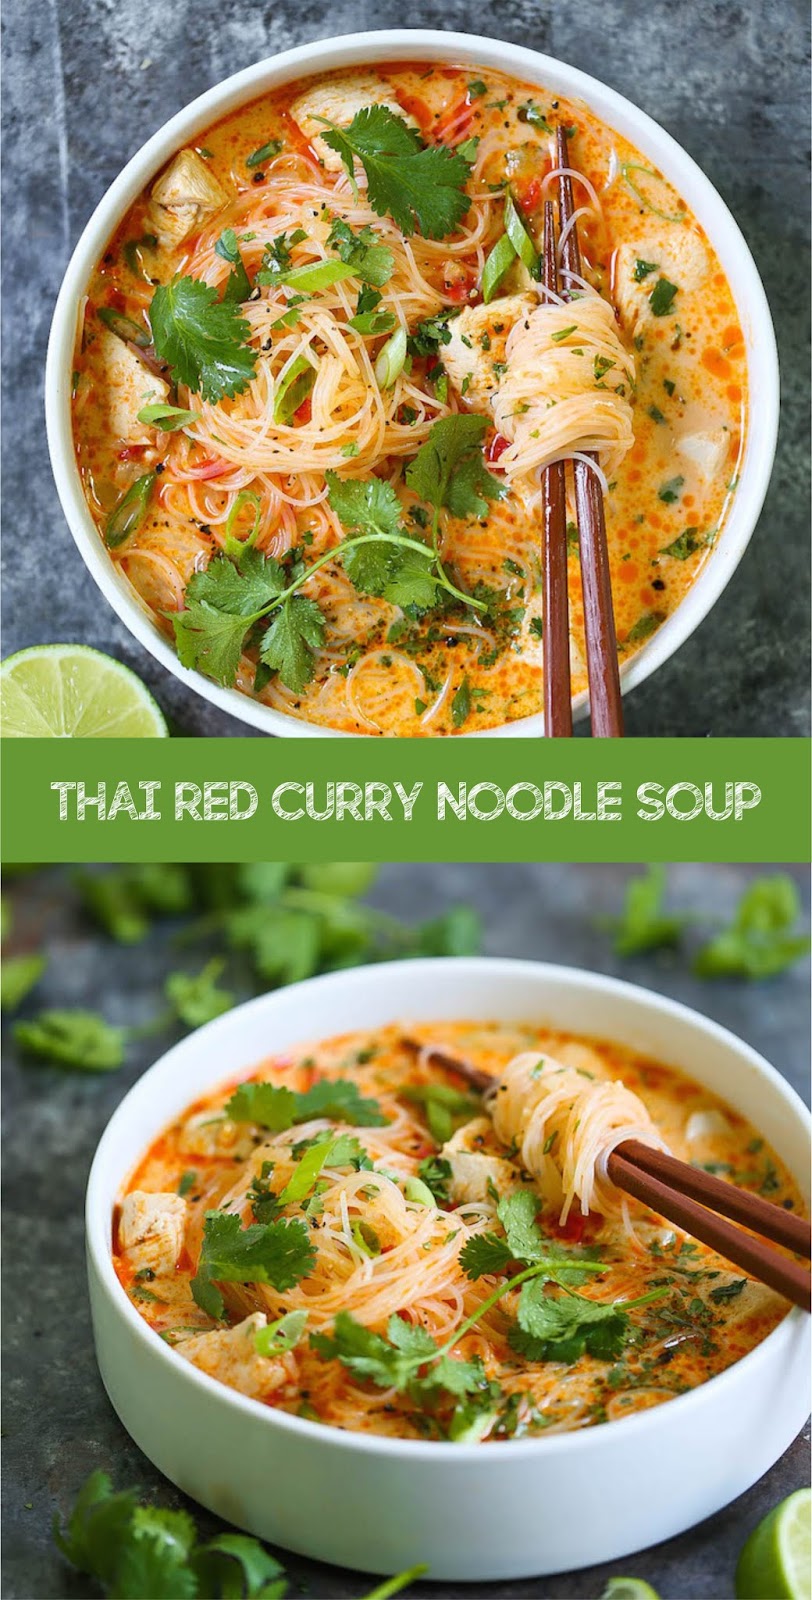 THAI RED CURRY NOODLE SOUP | EAT